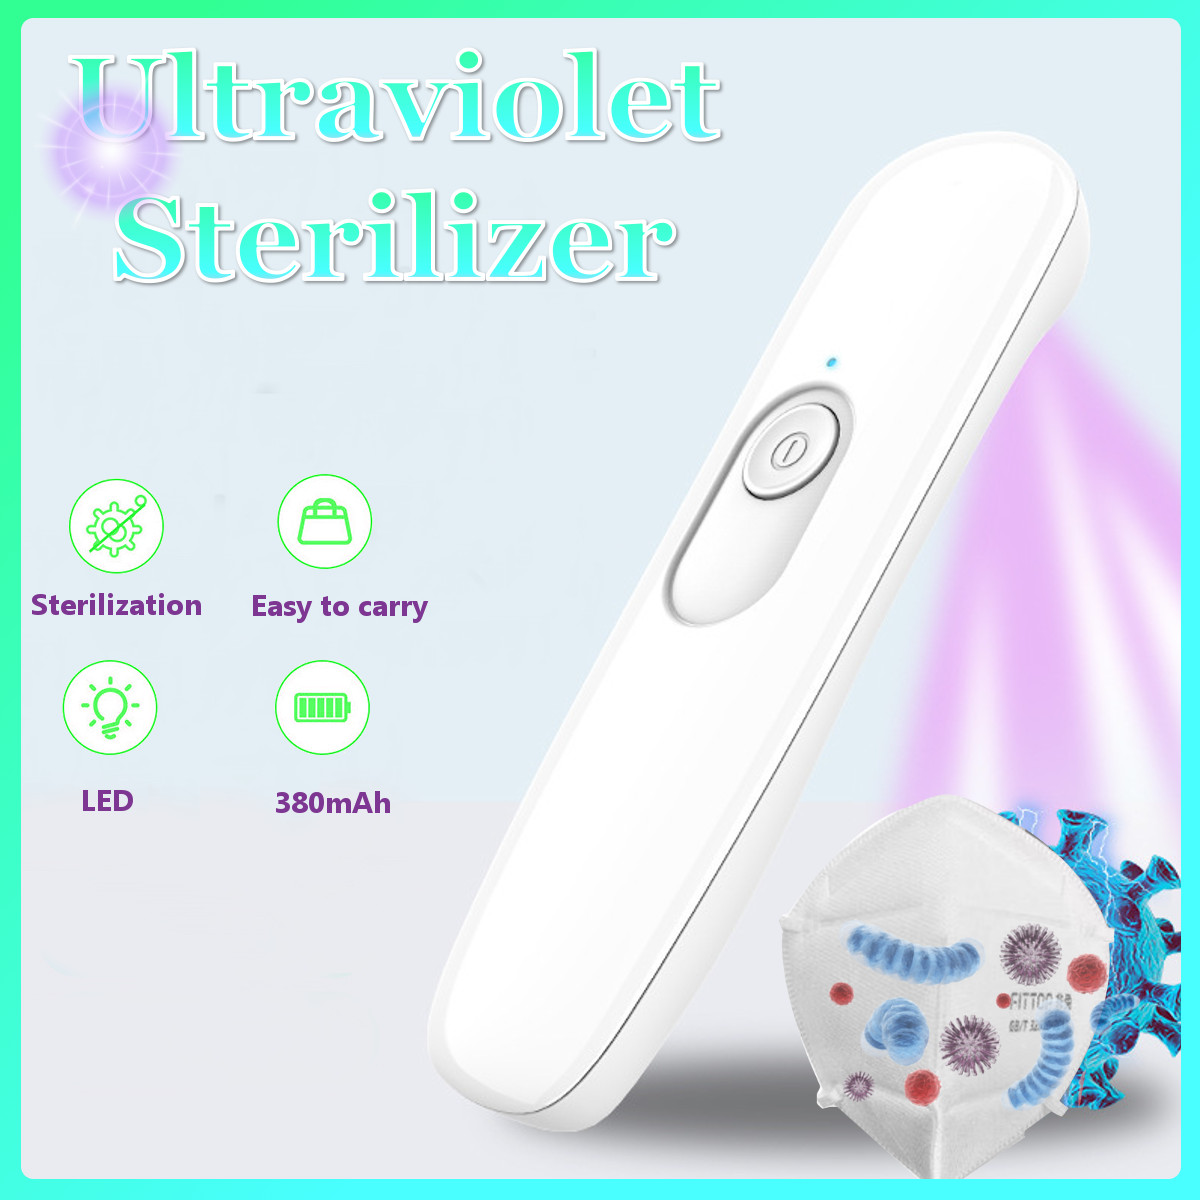 Portable-Sterilize-Germicidal-UV-Lamp-Home-Handheld-Disinfection-Light-Bulb-Home-1672442-1